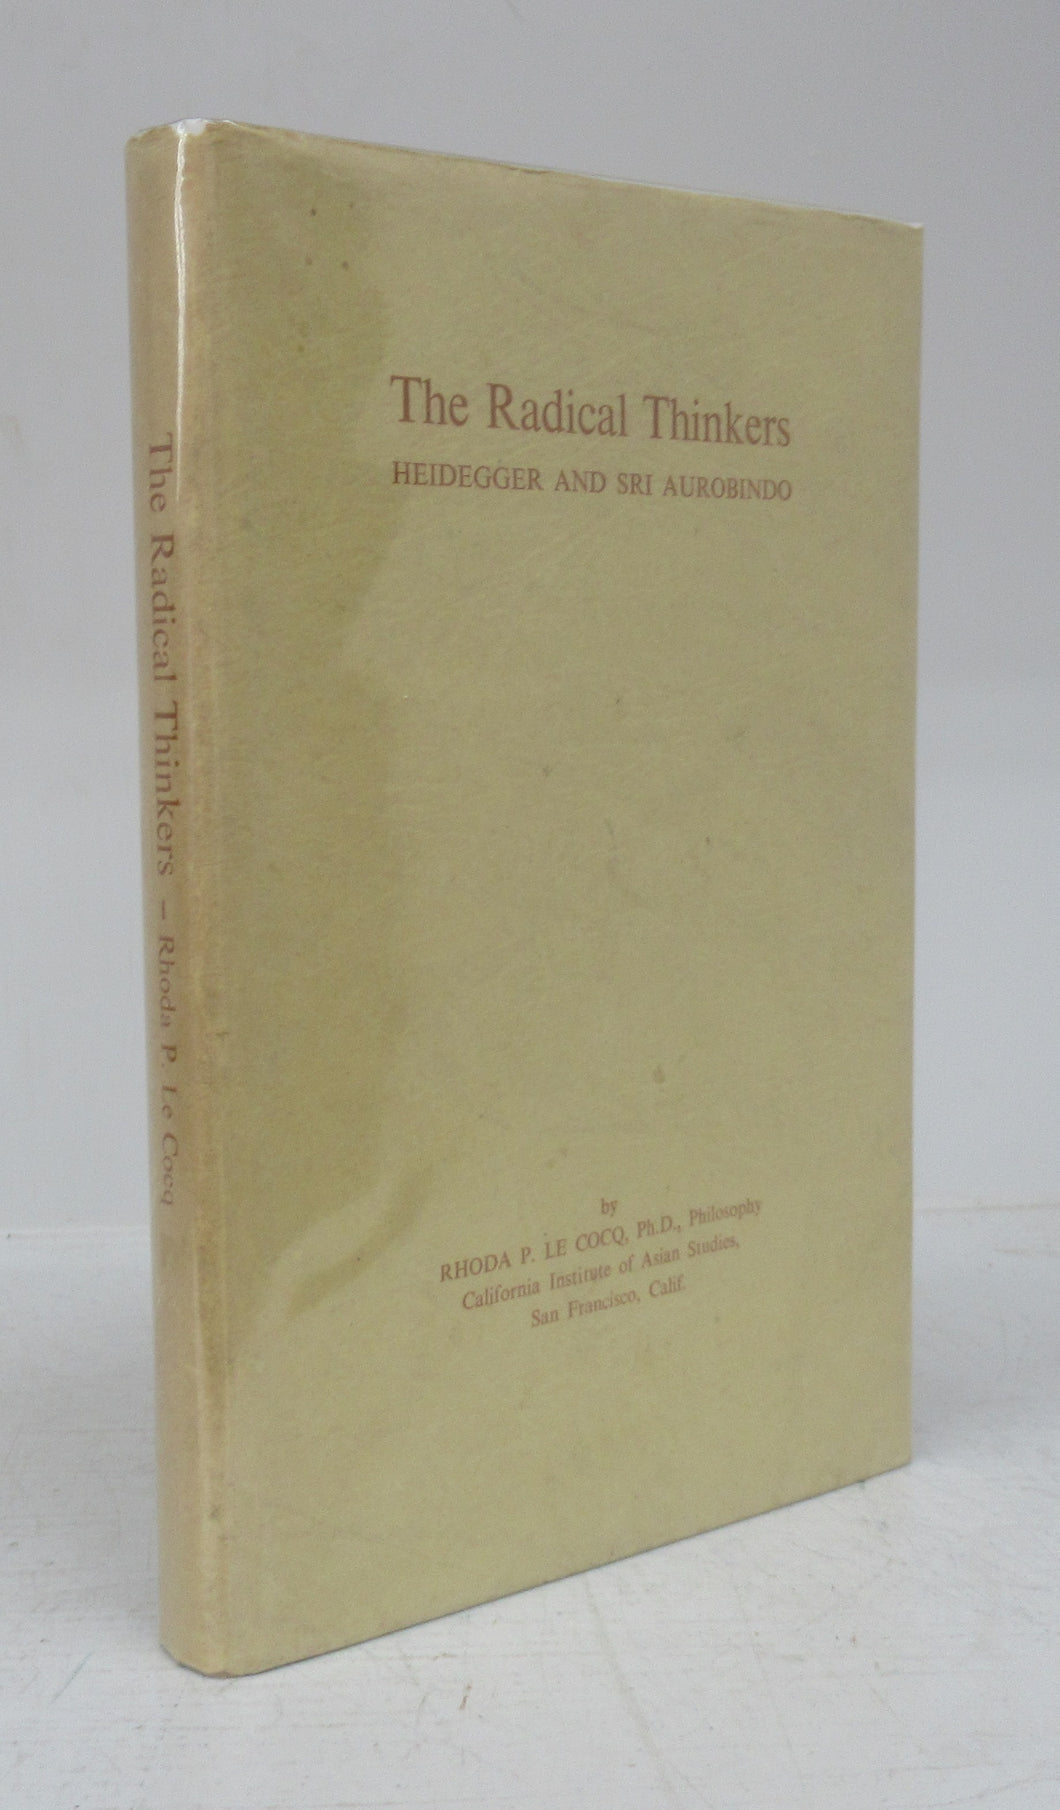 The Radical Thinkers: Heidegger and Sri Aurobindo